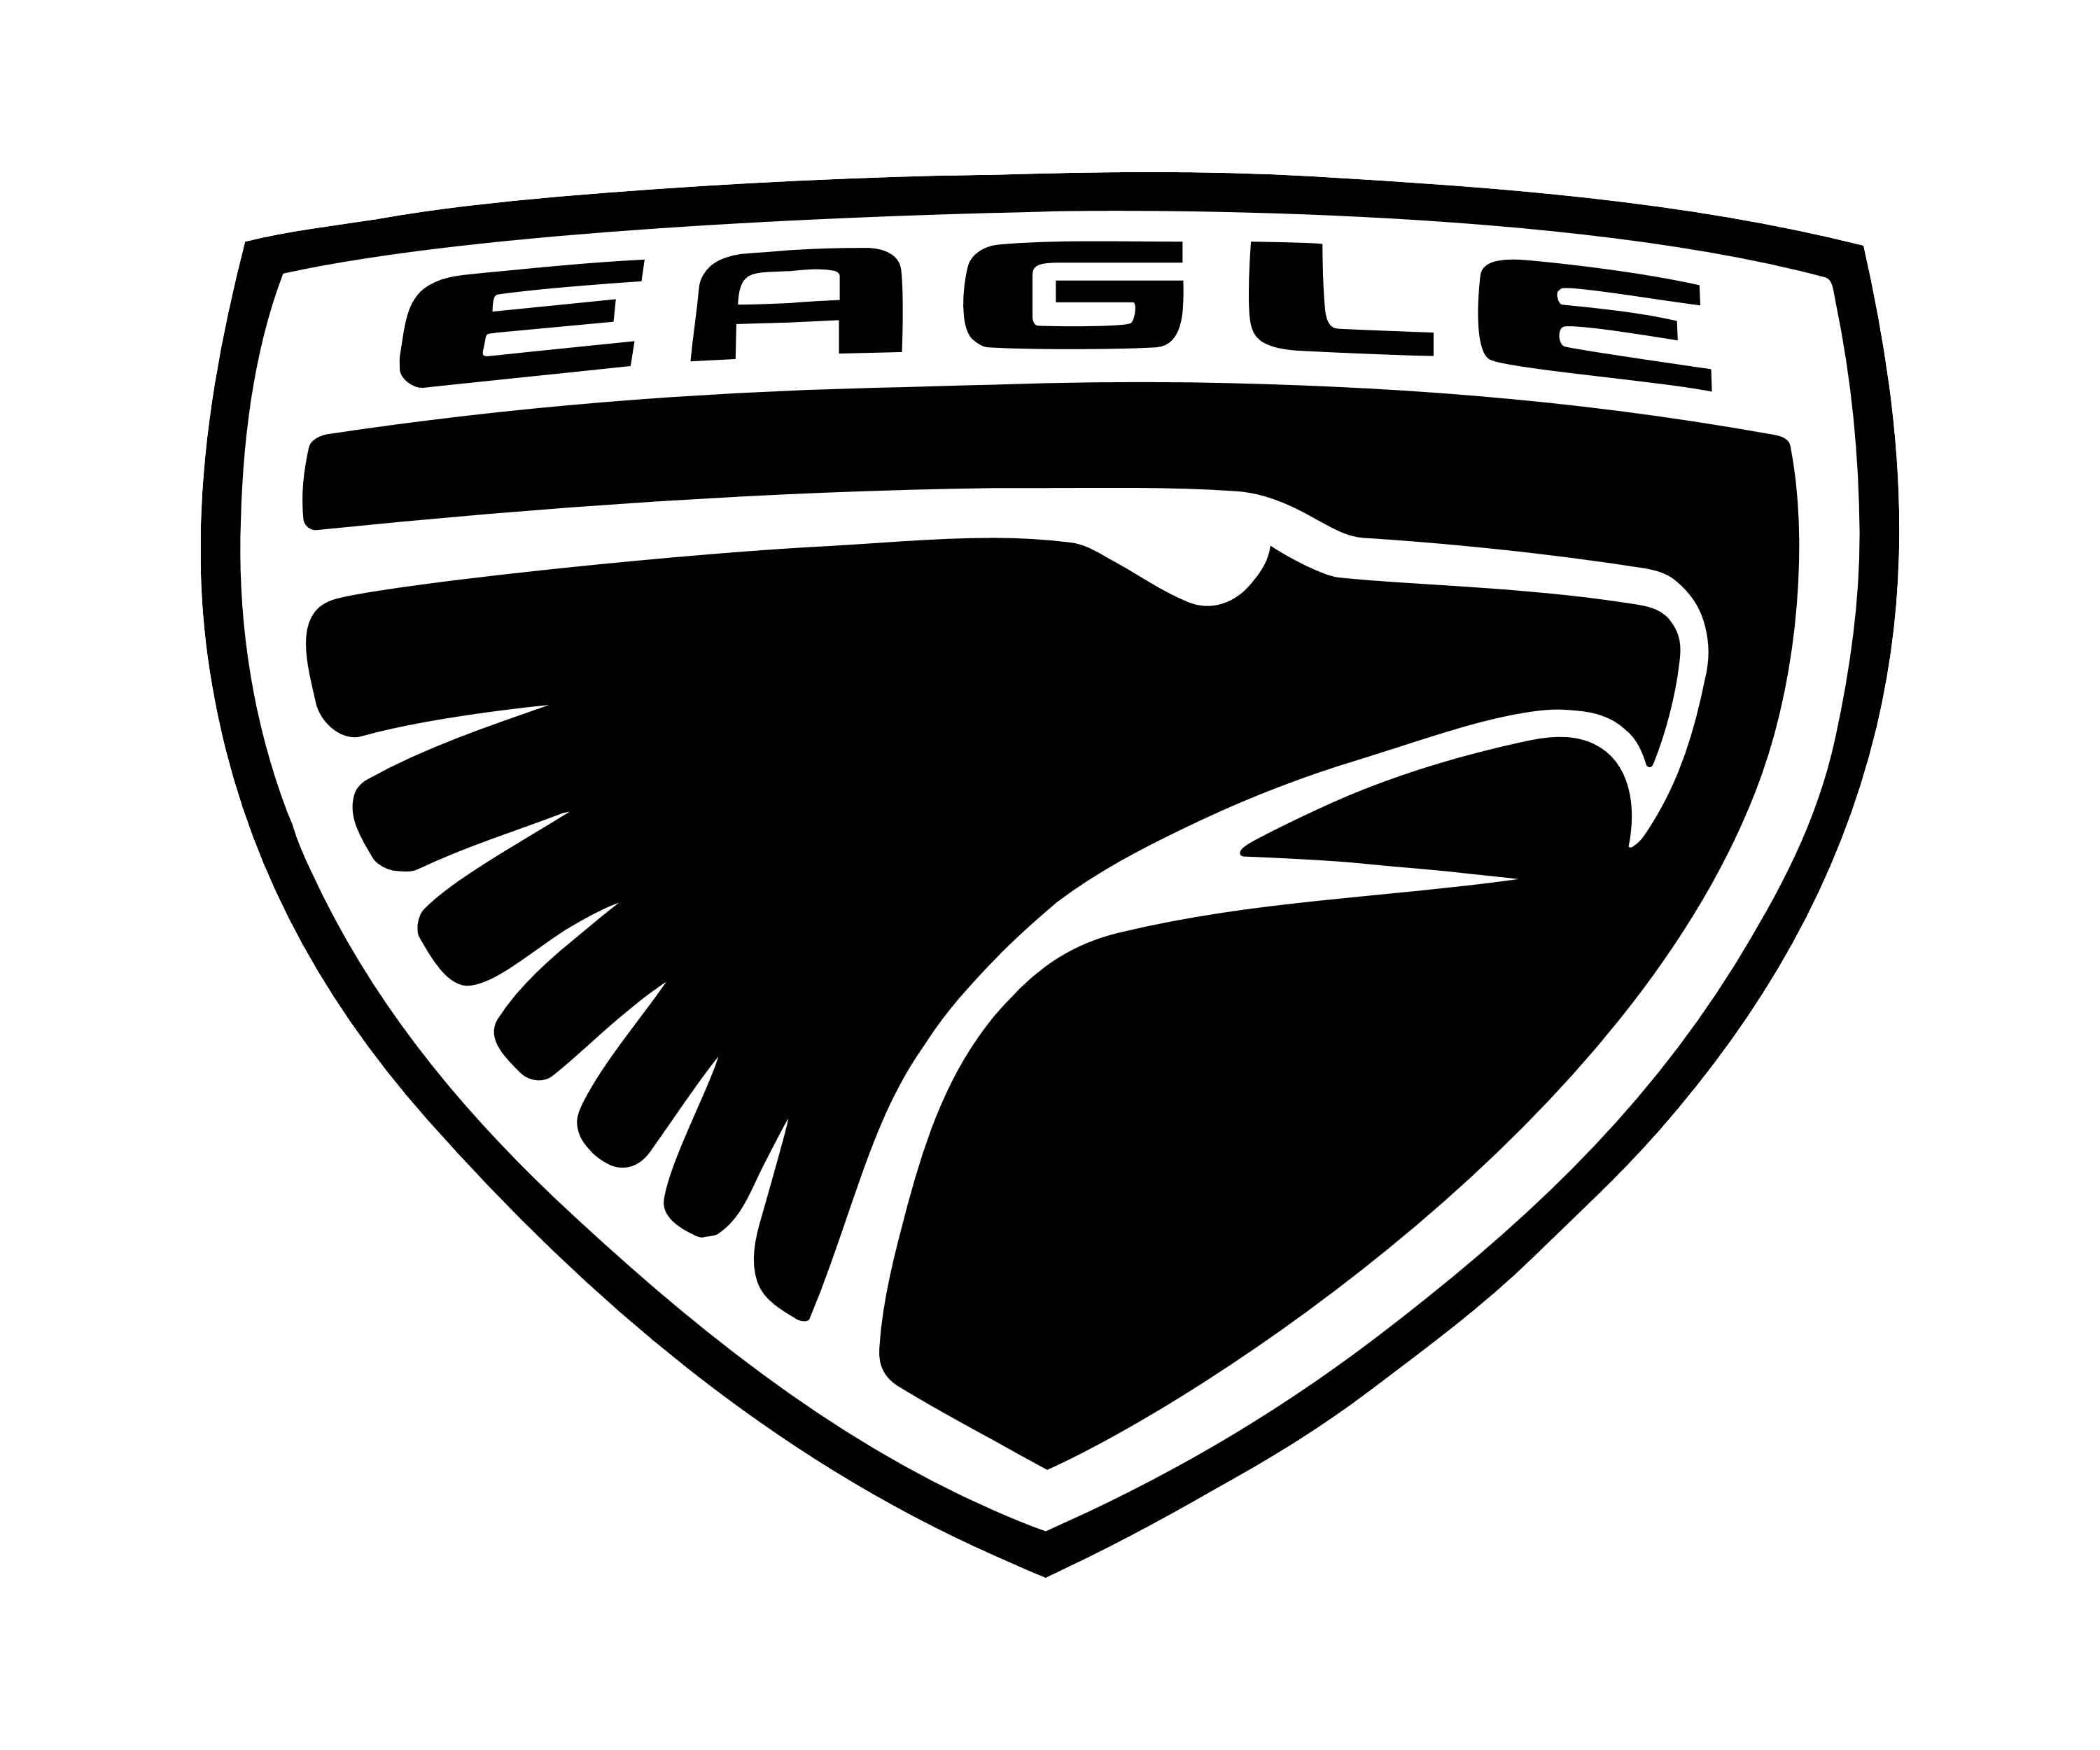 Eagle Car Logo - Eagle Logo, HD Png, Information